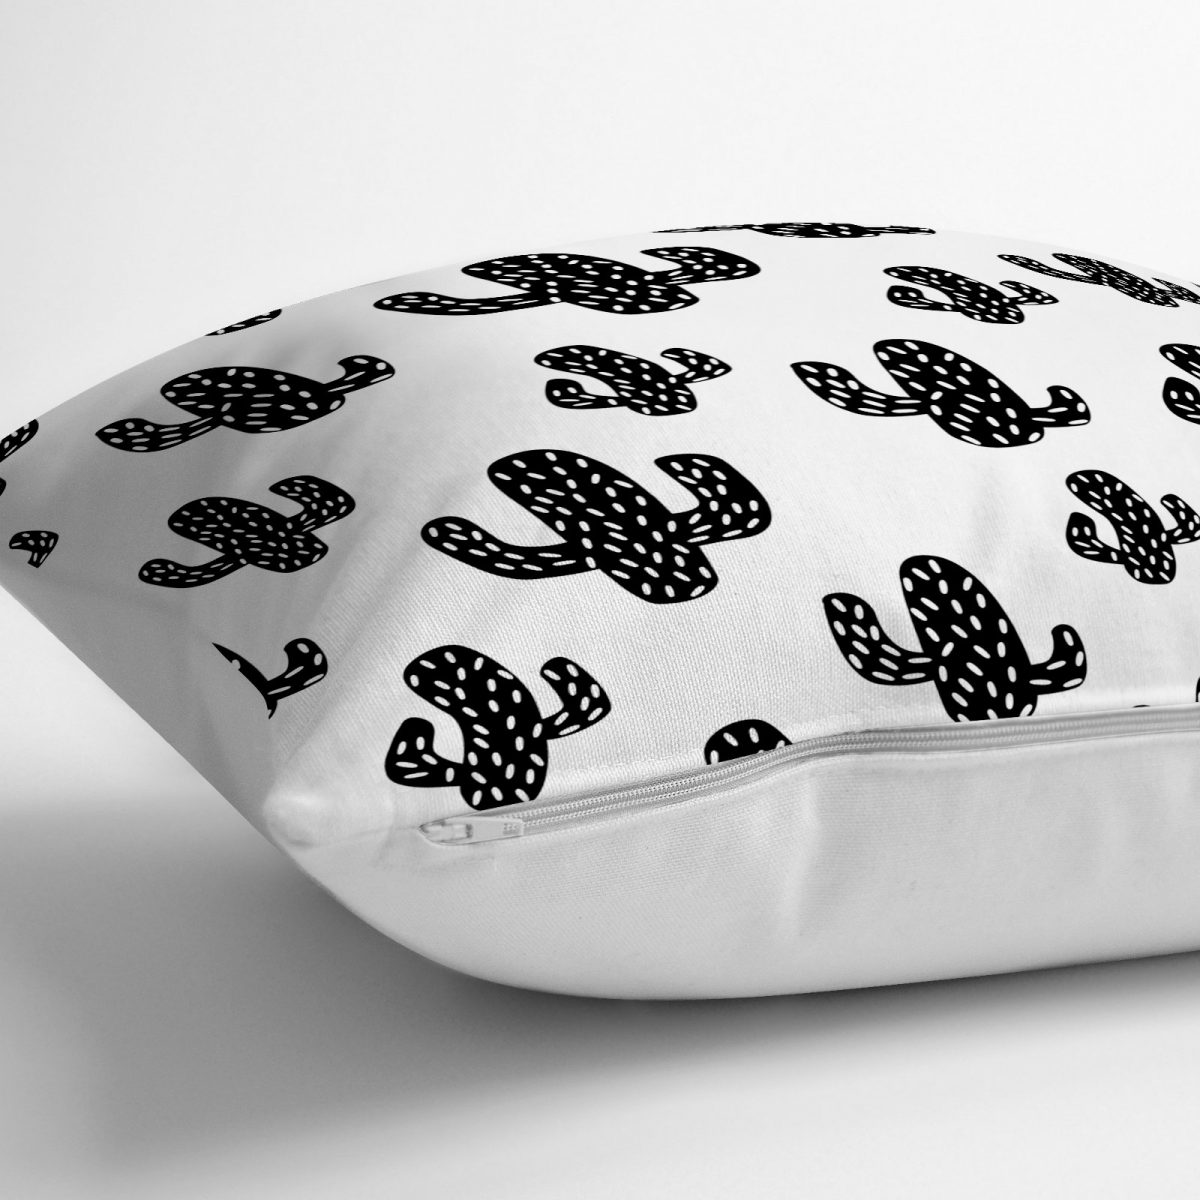 Siyah Beyaz Kaktüs Desenli Dekoratif Yer Minderi - 70 x 70 cm Realhomes